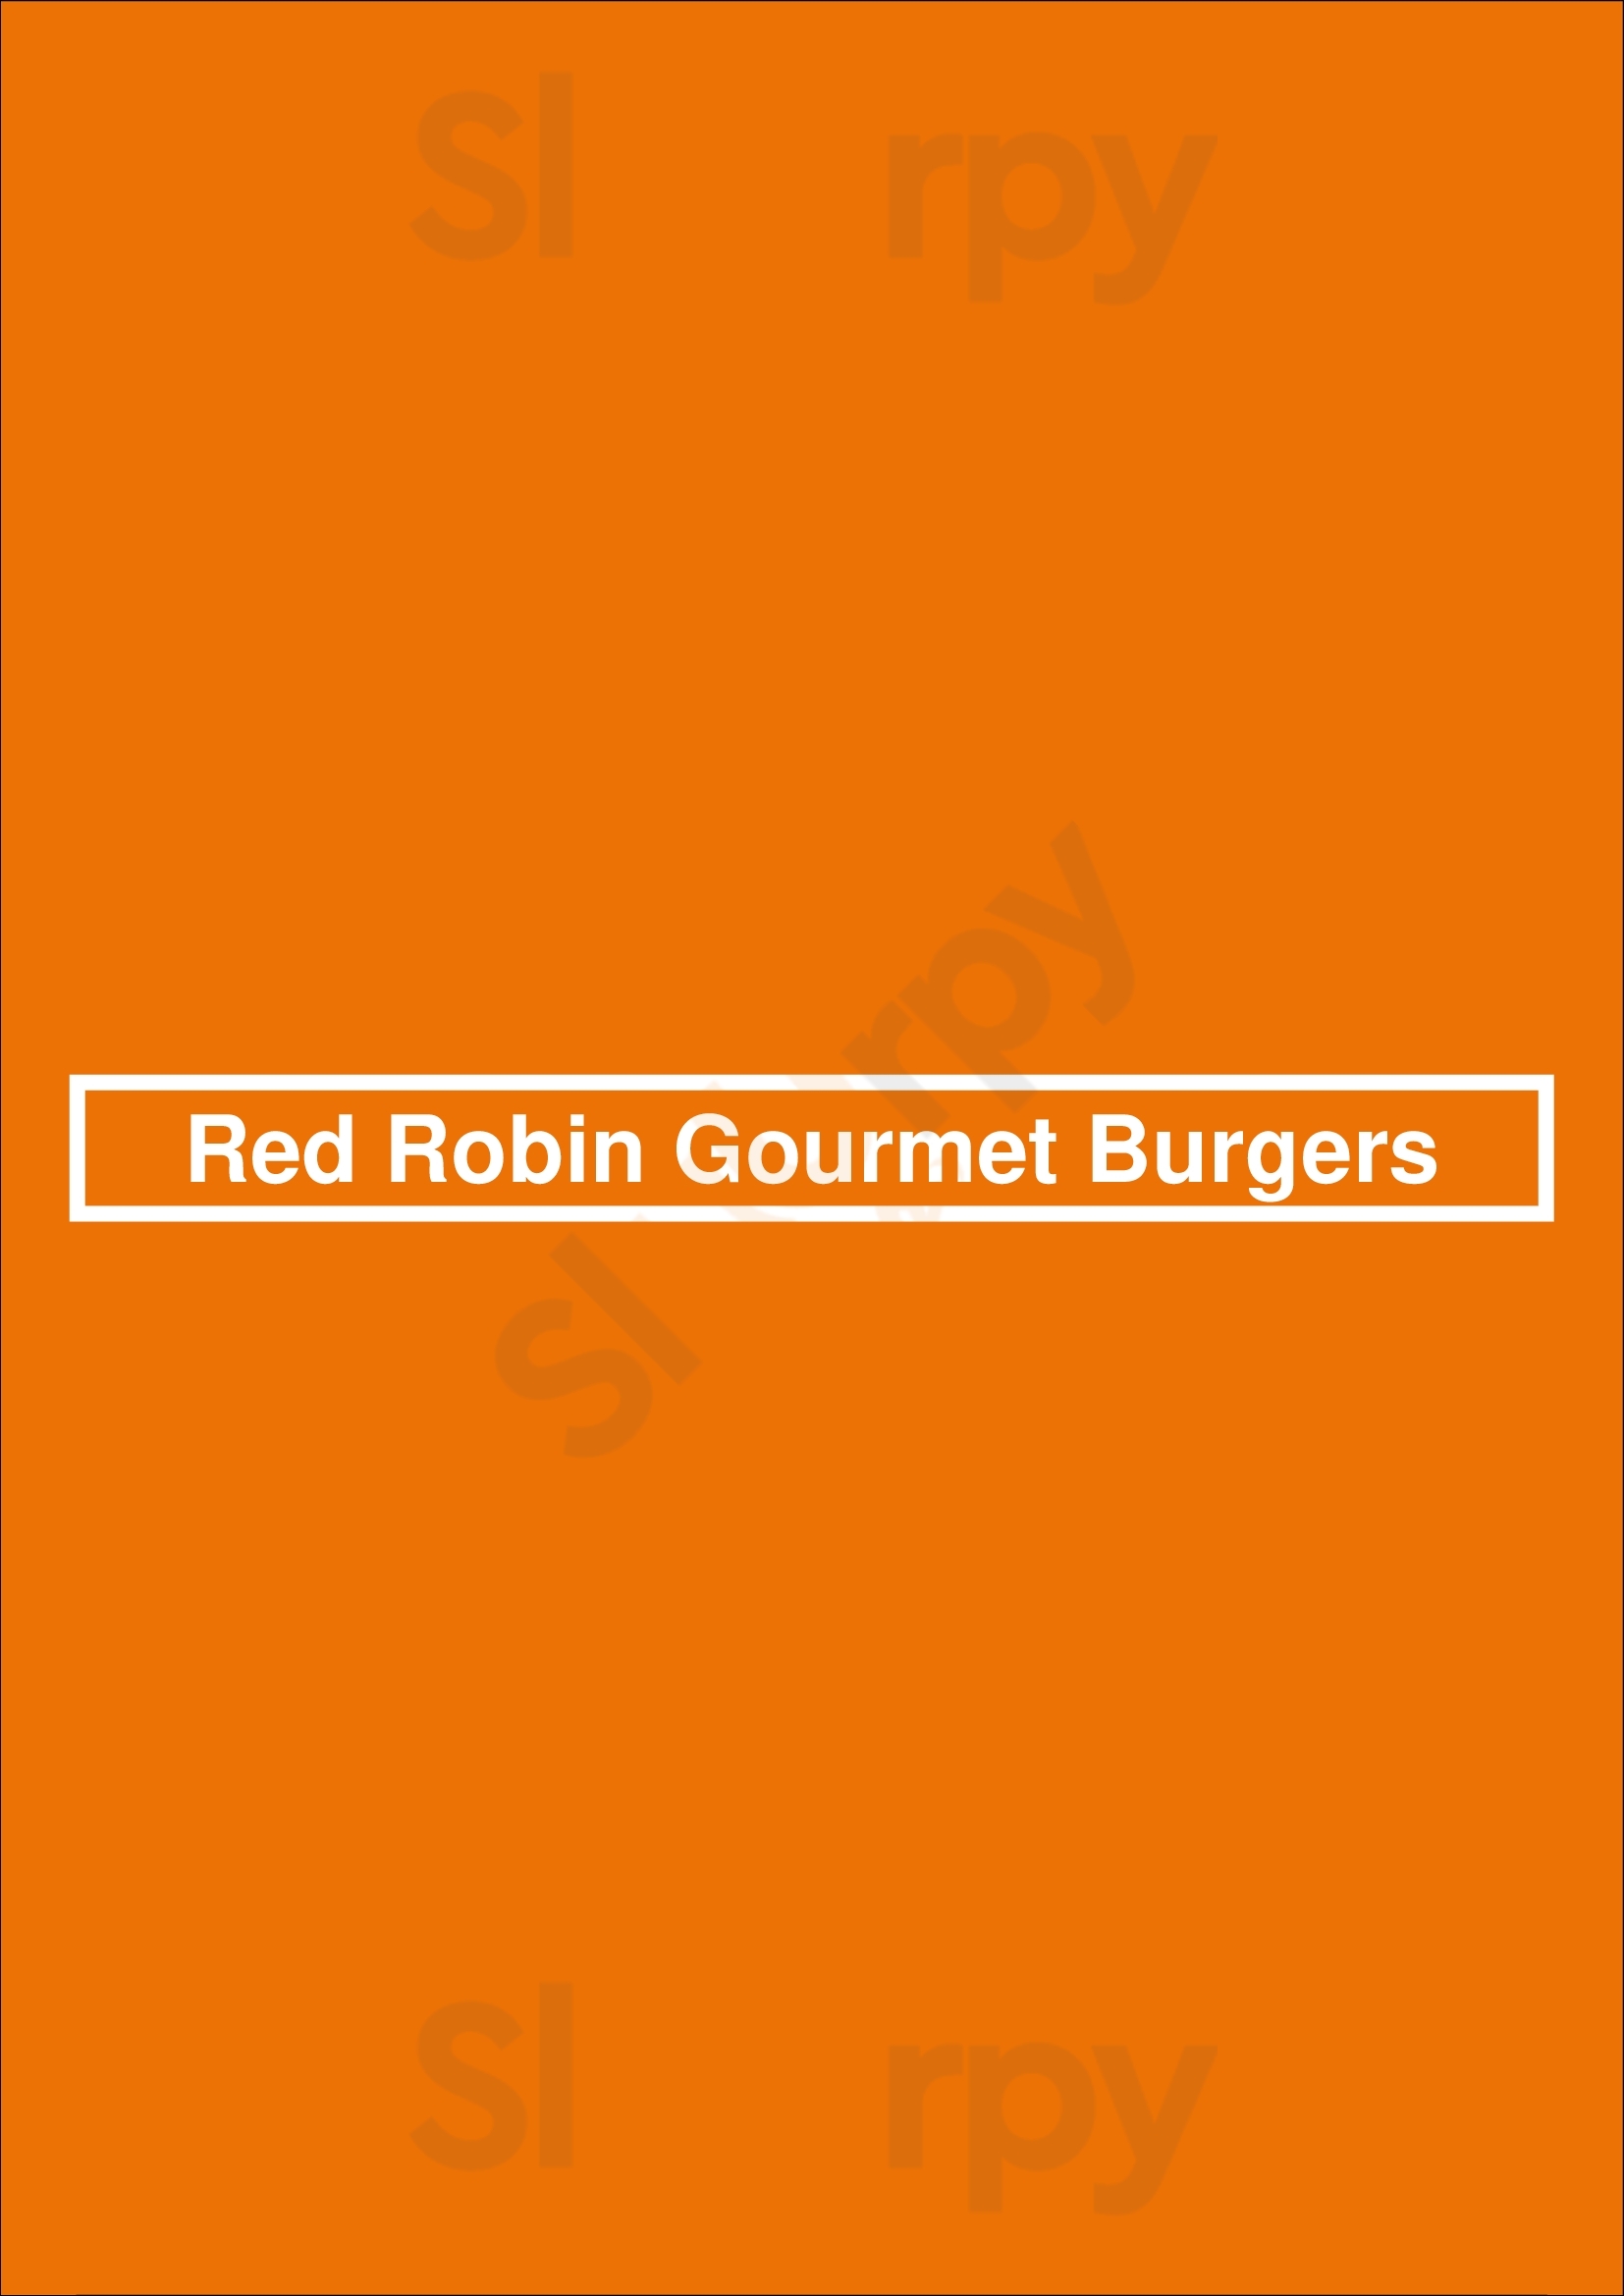 Red Robin Gourmet Burgers Louisville Menu - 1